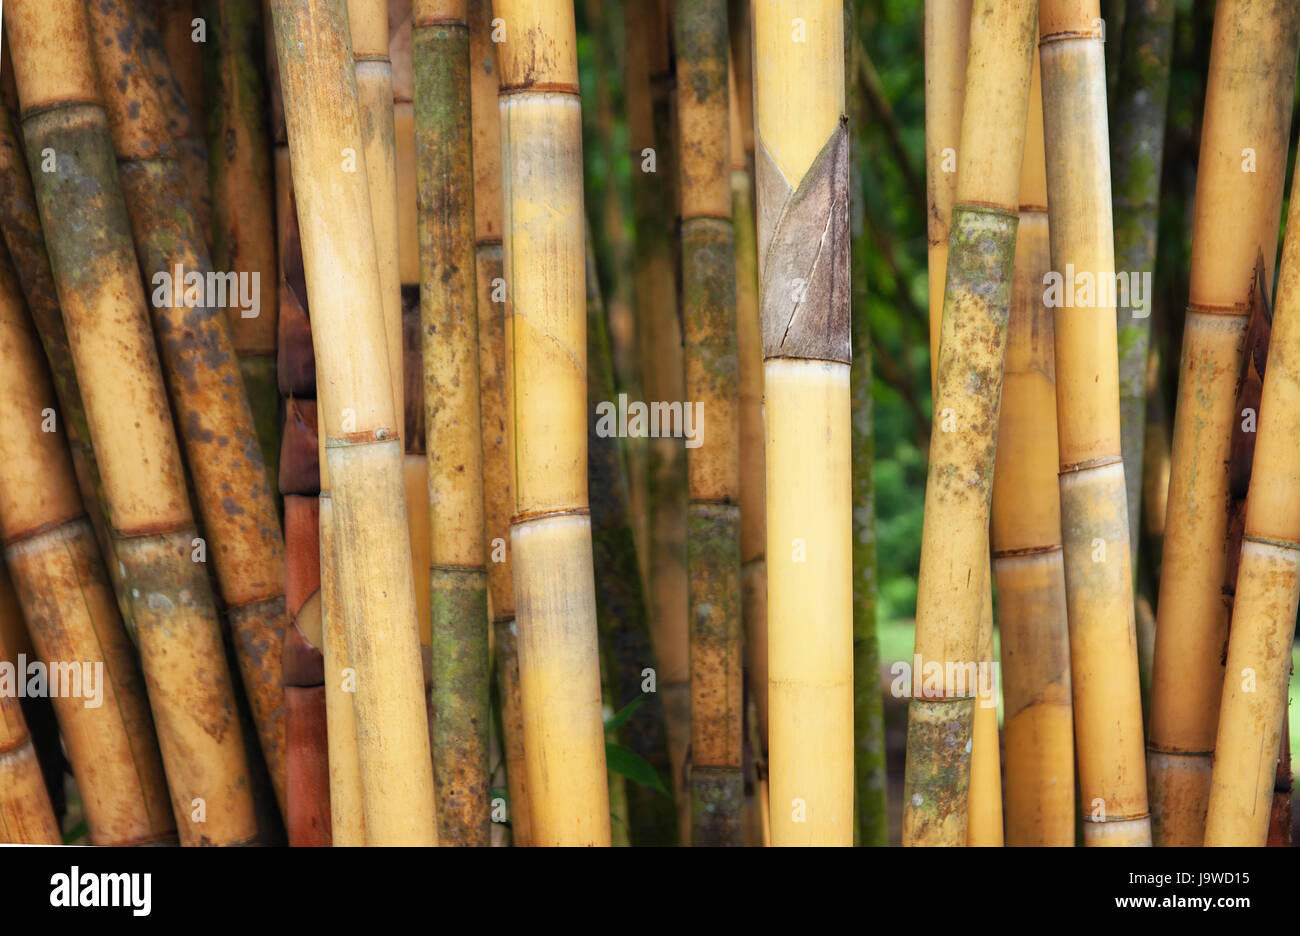 environment, enviroment, tree, trees, wood, leaves, bamboo, plants, outdoors, Stock Photo